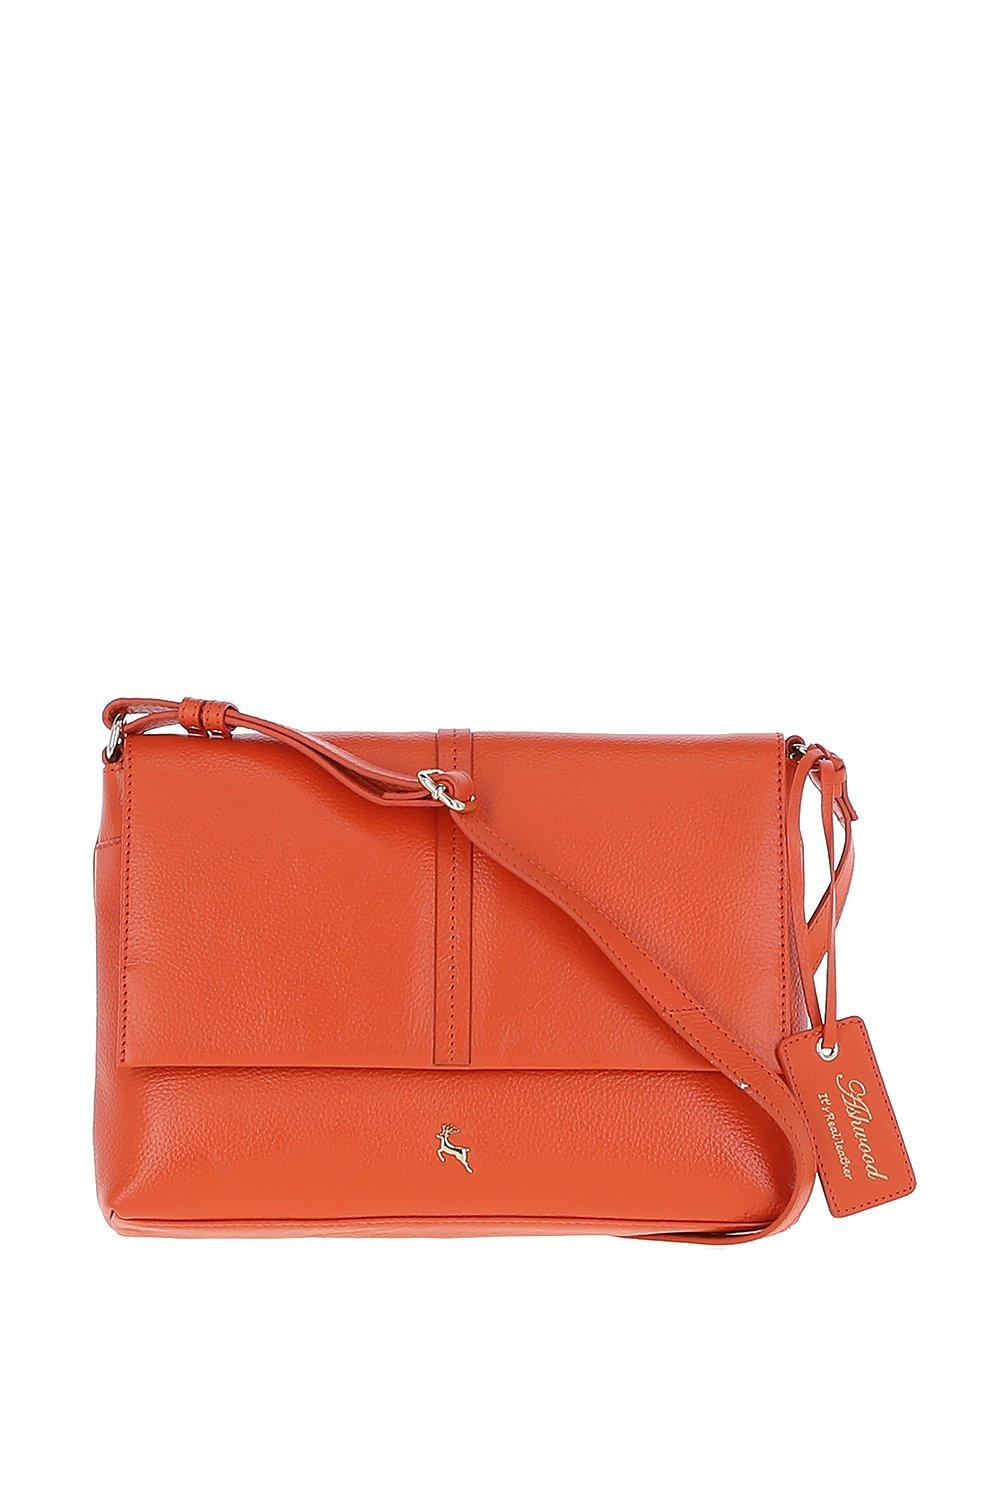 Кожаная сумка через плечо Candy Ashwood Leather, оранжевый цена и фото